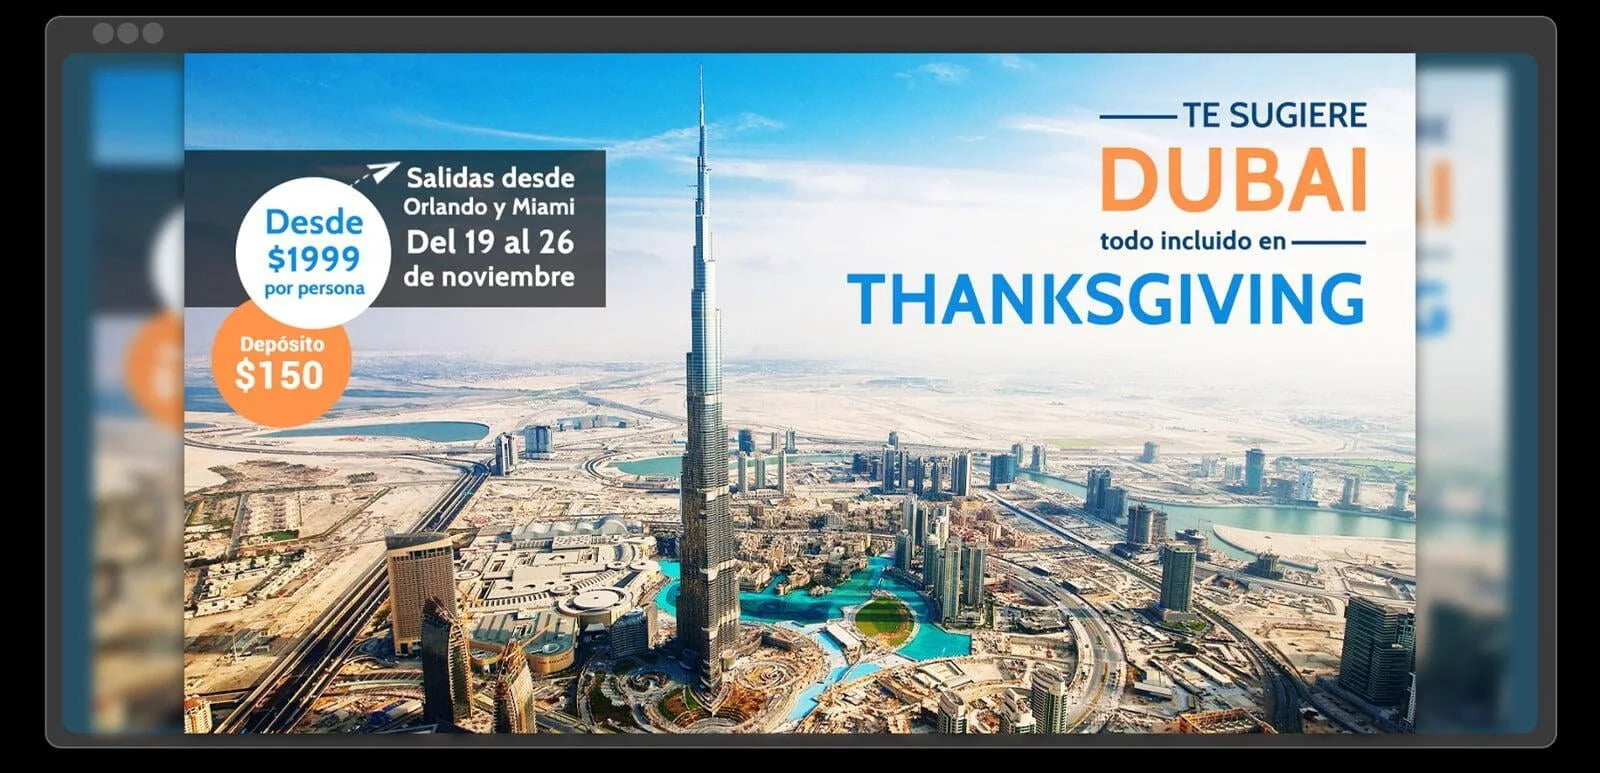 Dubai all incluided in Thanksgiving